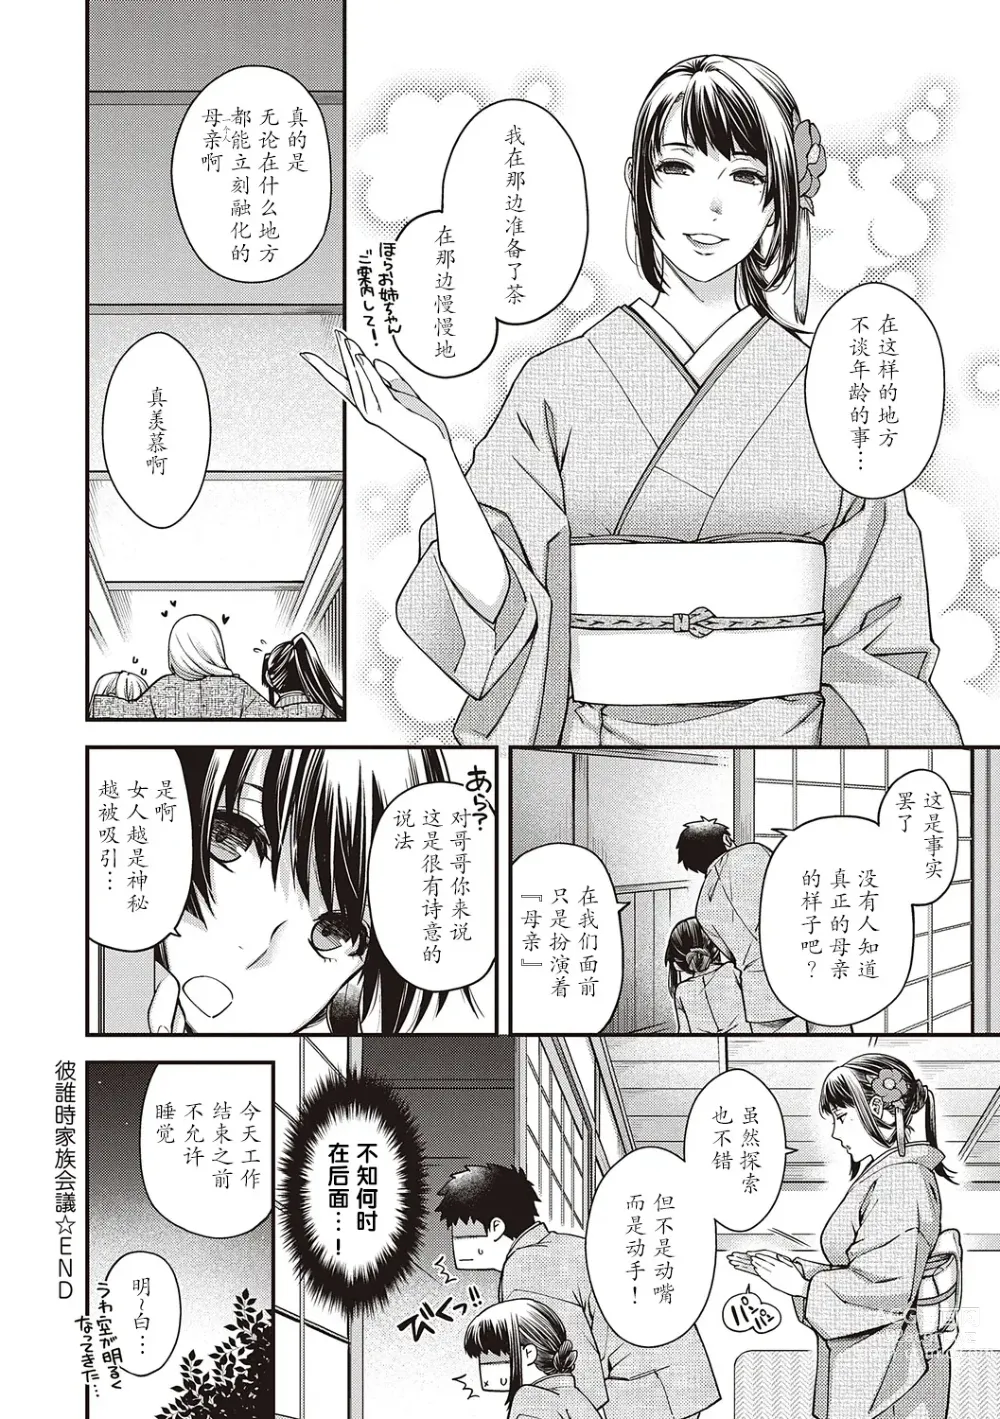 Page 4 of manga 彼誰時家族会議  演目『廻夜のケモノ』